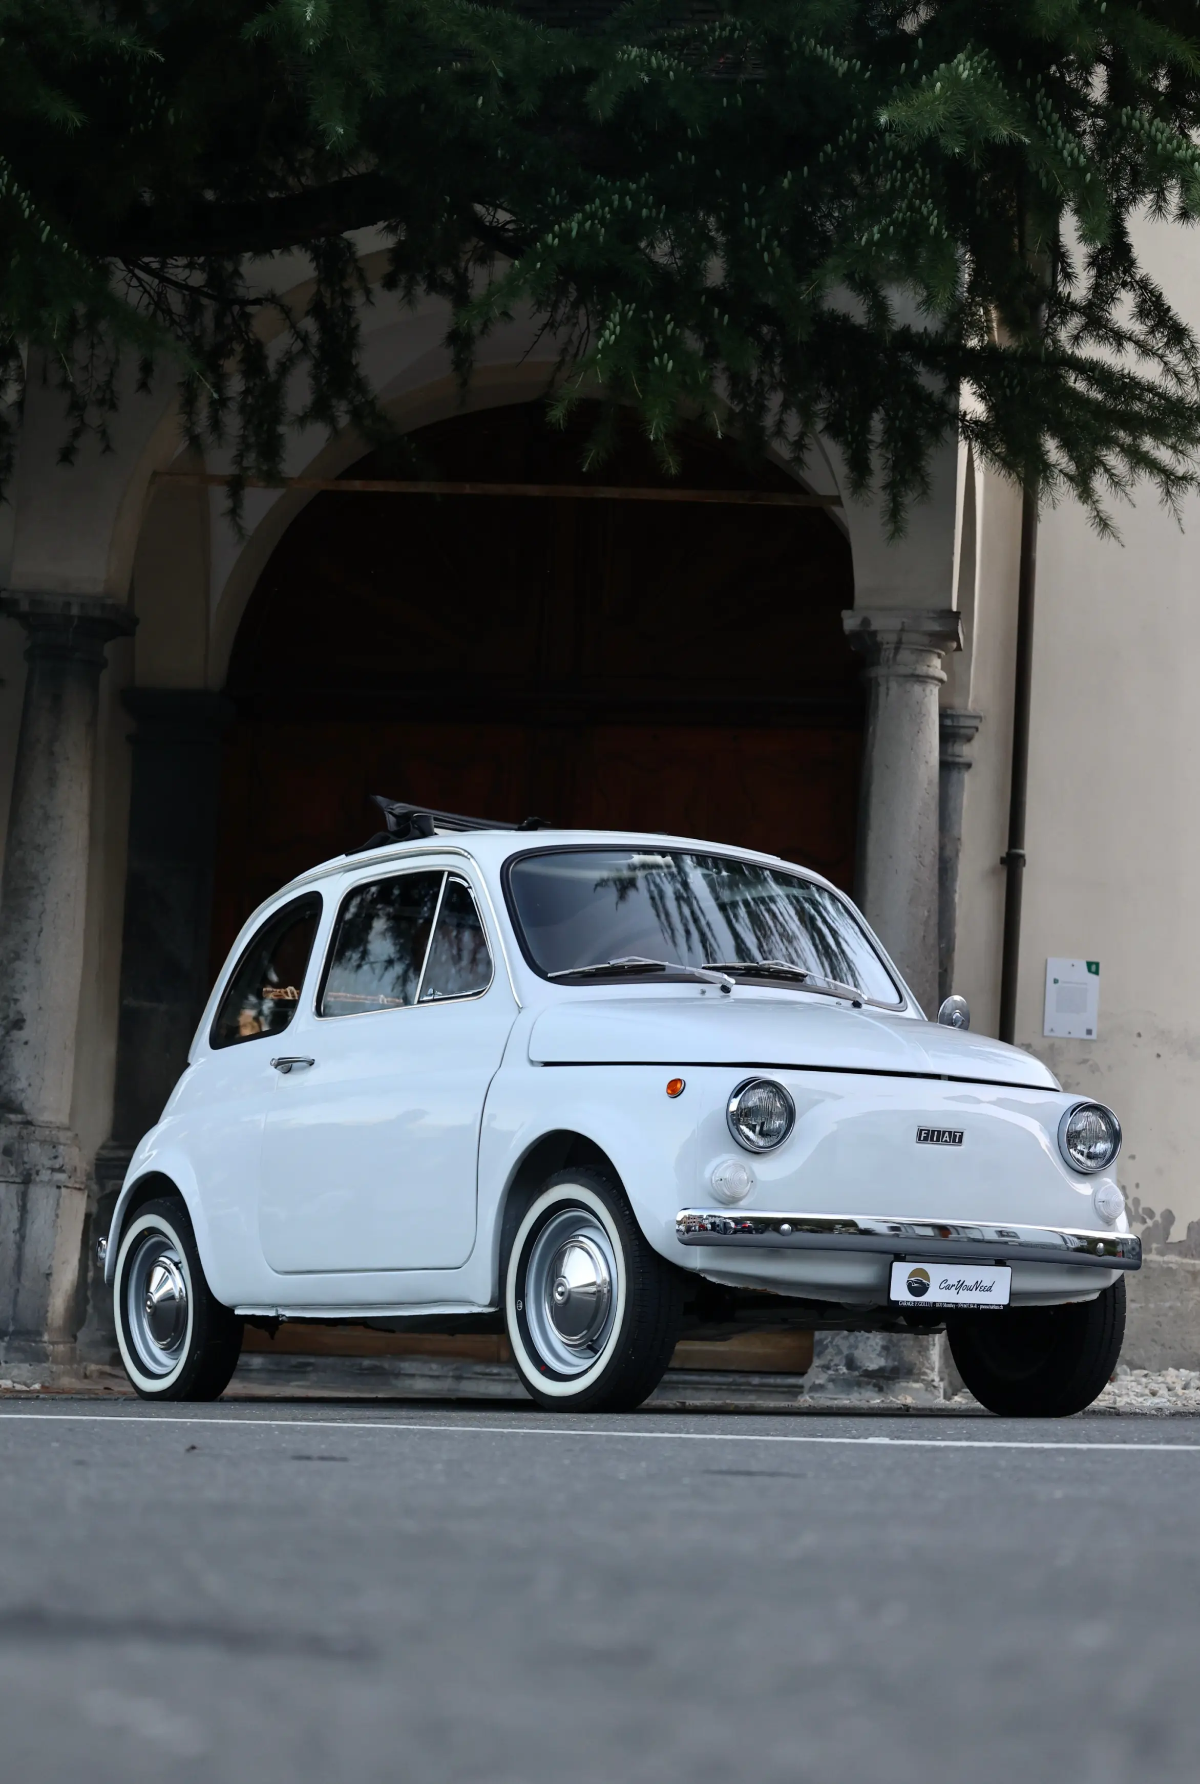 A Fiat collector’s car